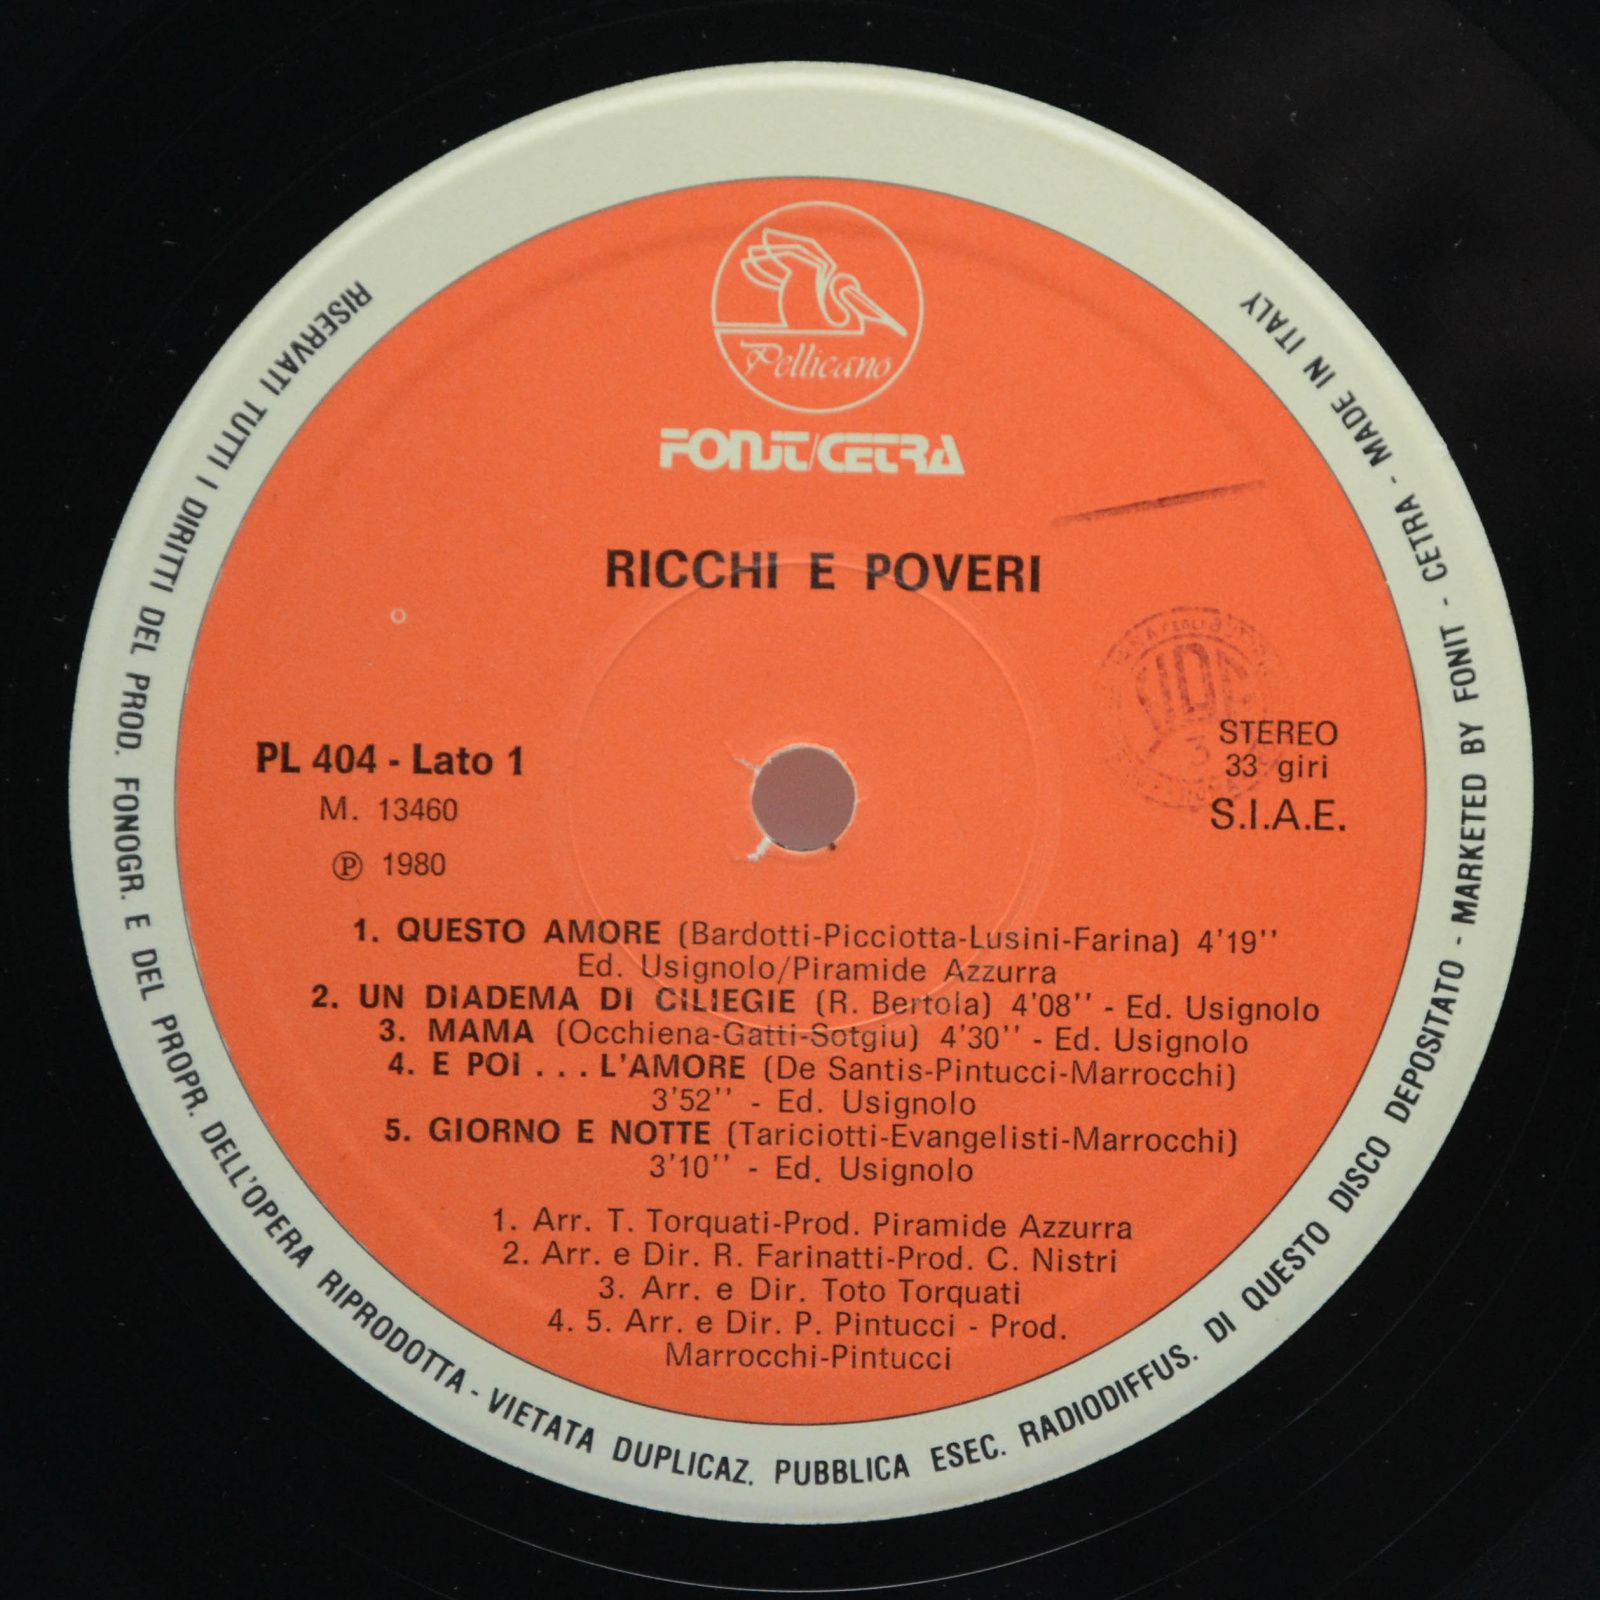 Ricchi & Poveri — Ricchi & Poveri (Italy), 1980